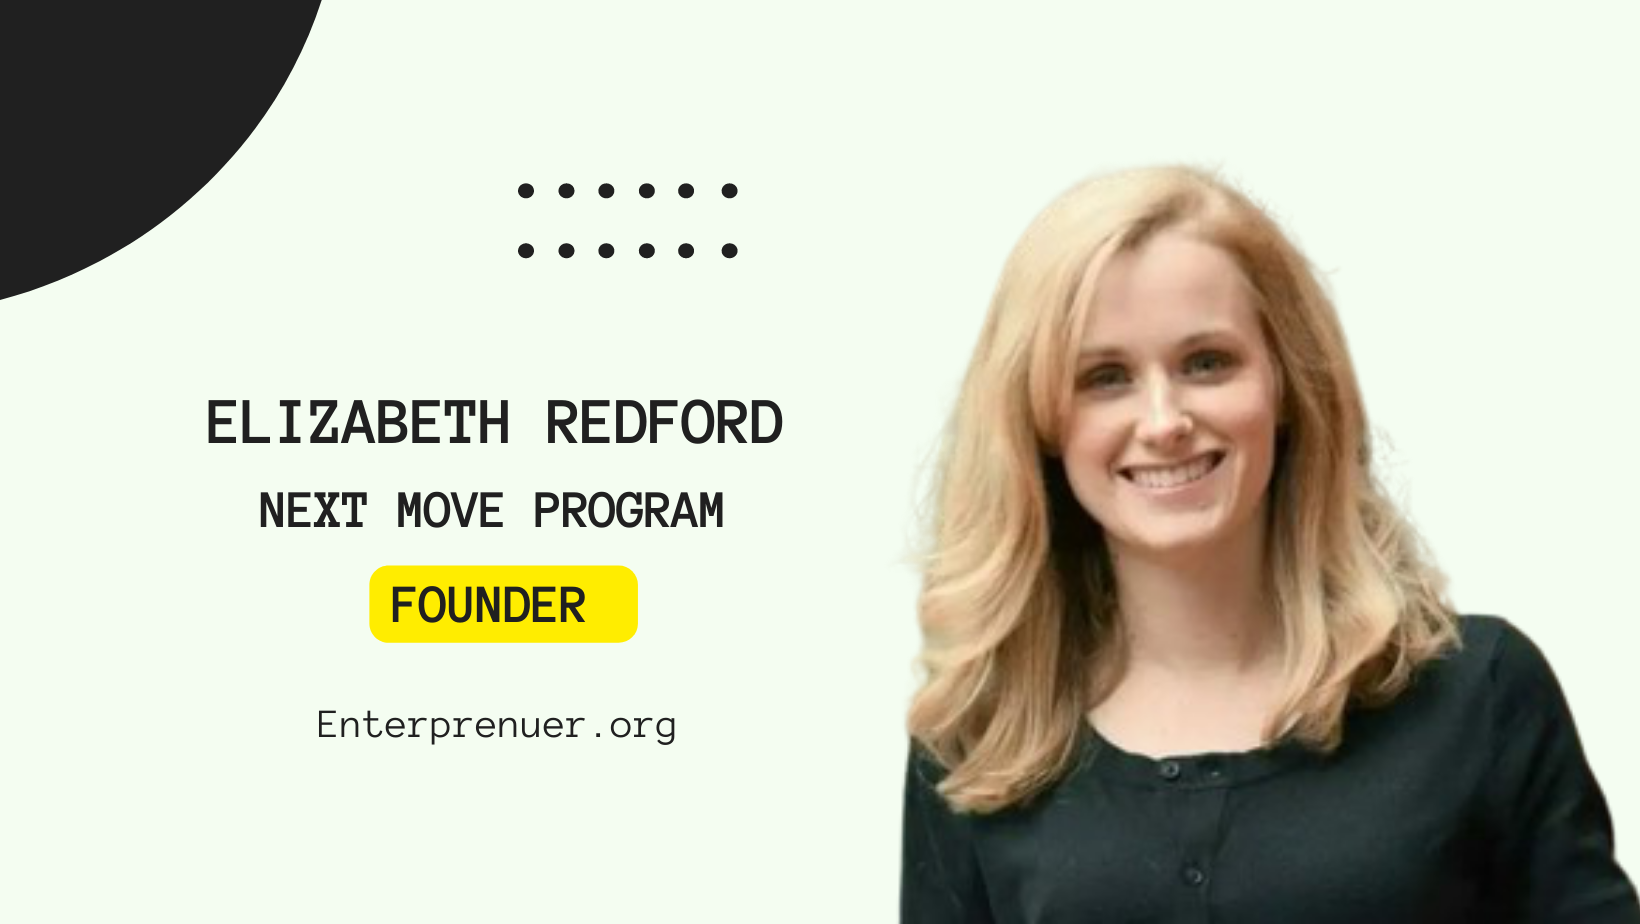 Elizabeth Redford Co-Founder of Next Move Program